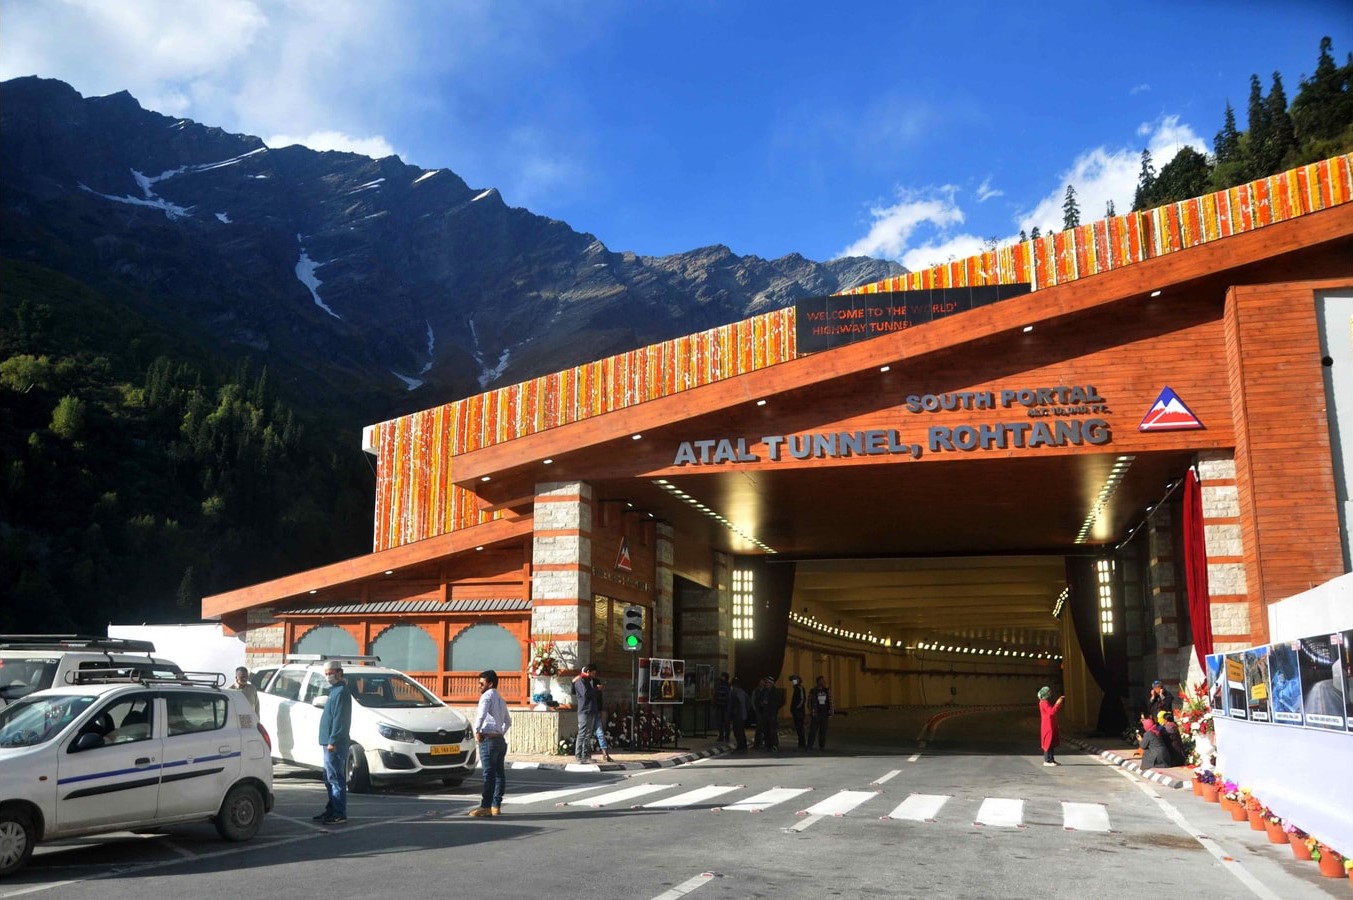 Day 6: Chandartal- Atal Tunnel - Manali [6 hrs]: 